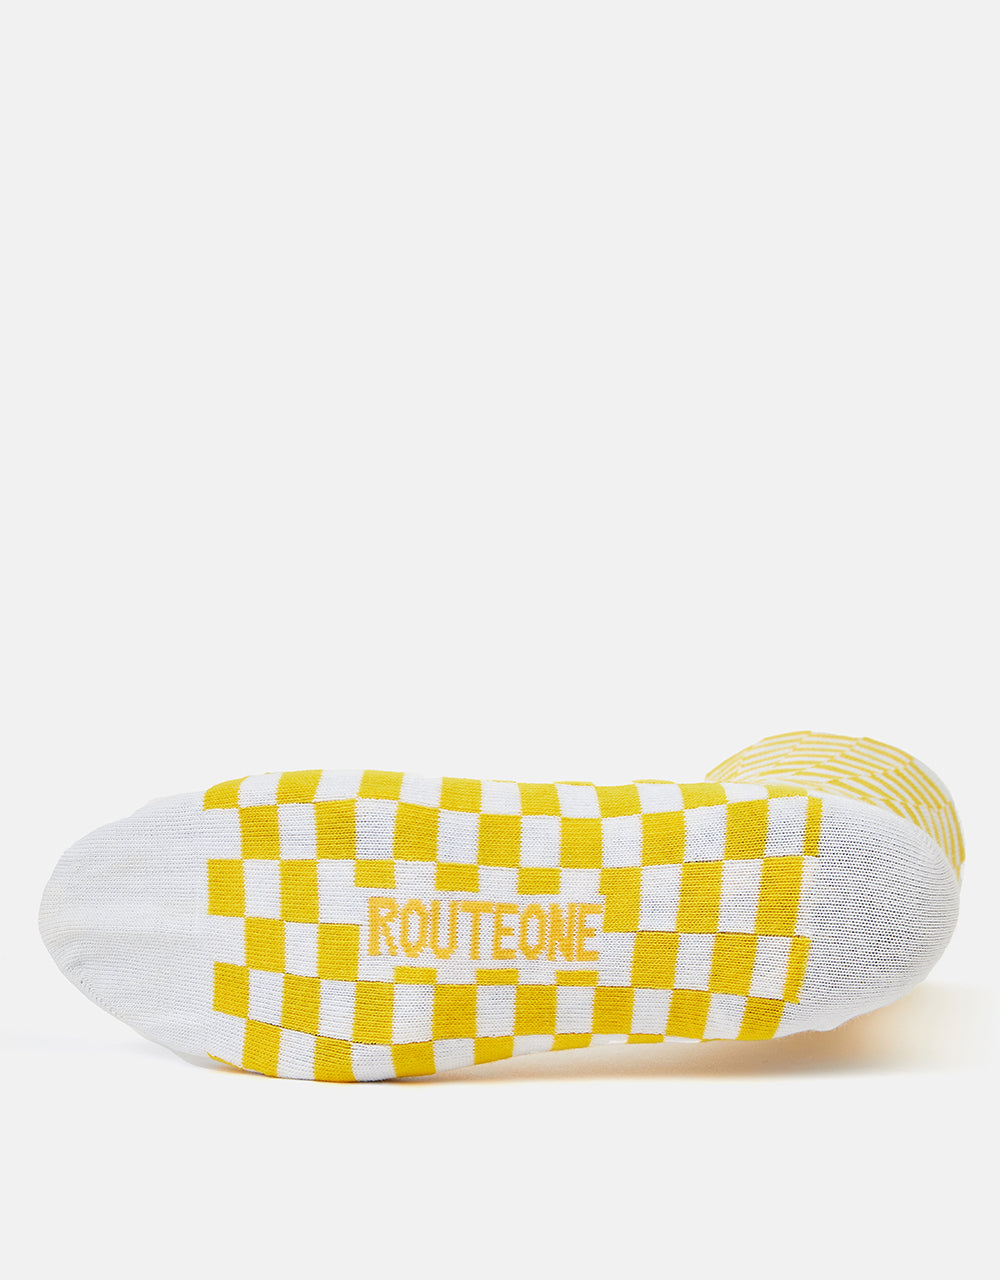 Route One Chequered Socks - White/Yellow